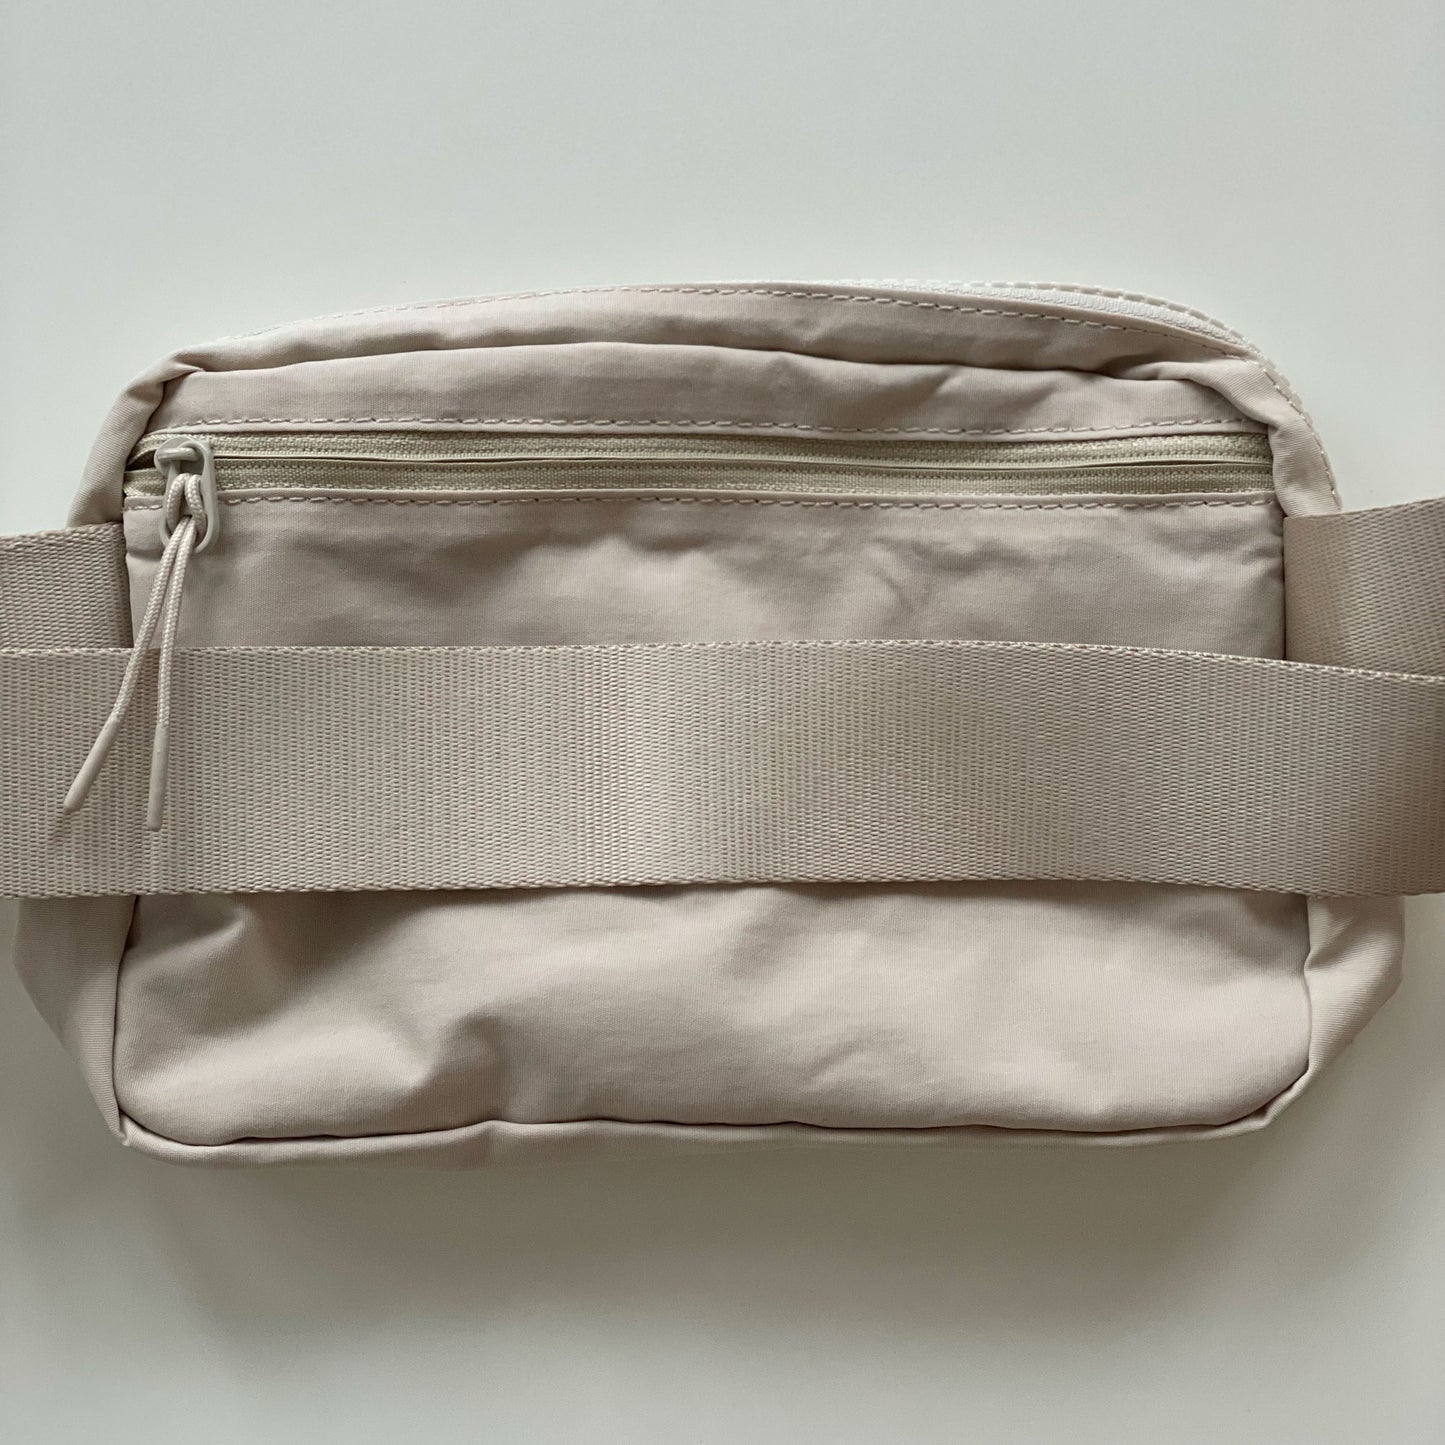 back of fanny pack nylon crossbody, showing zipper pocket